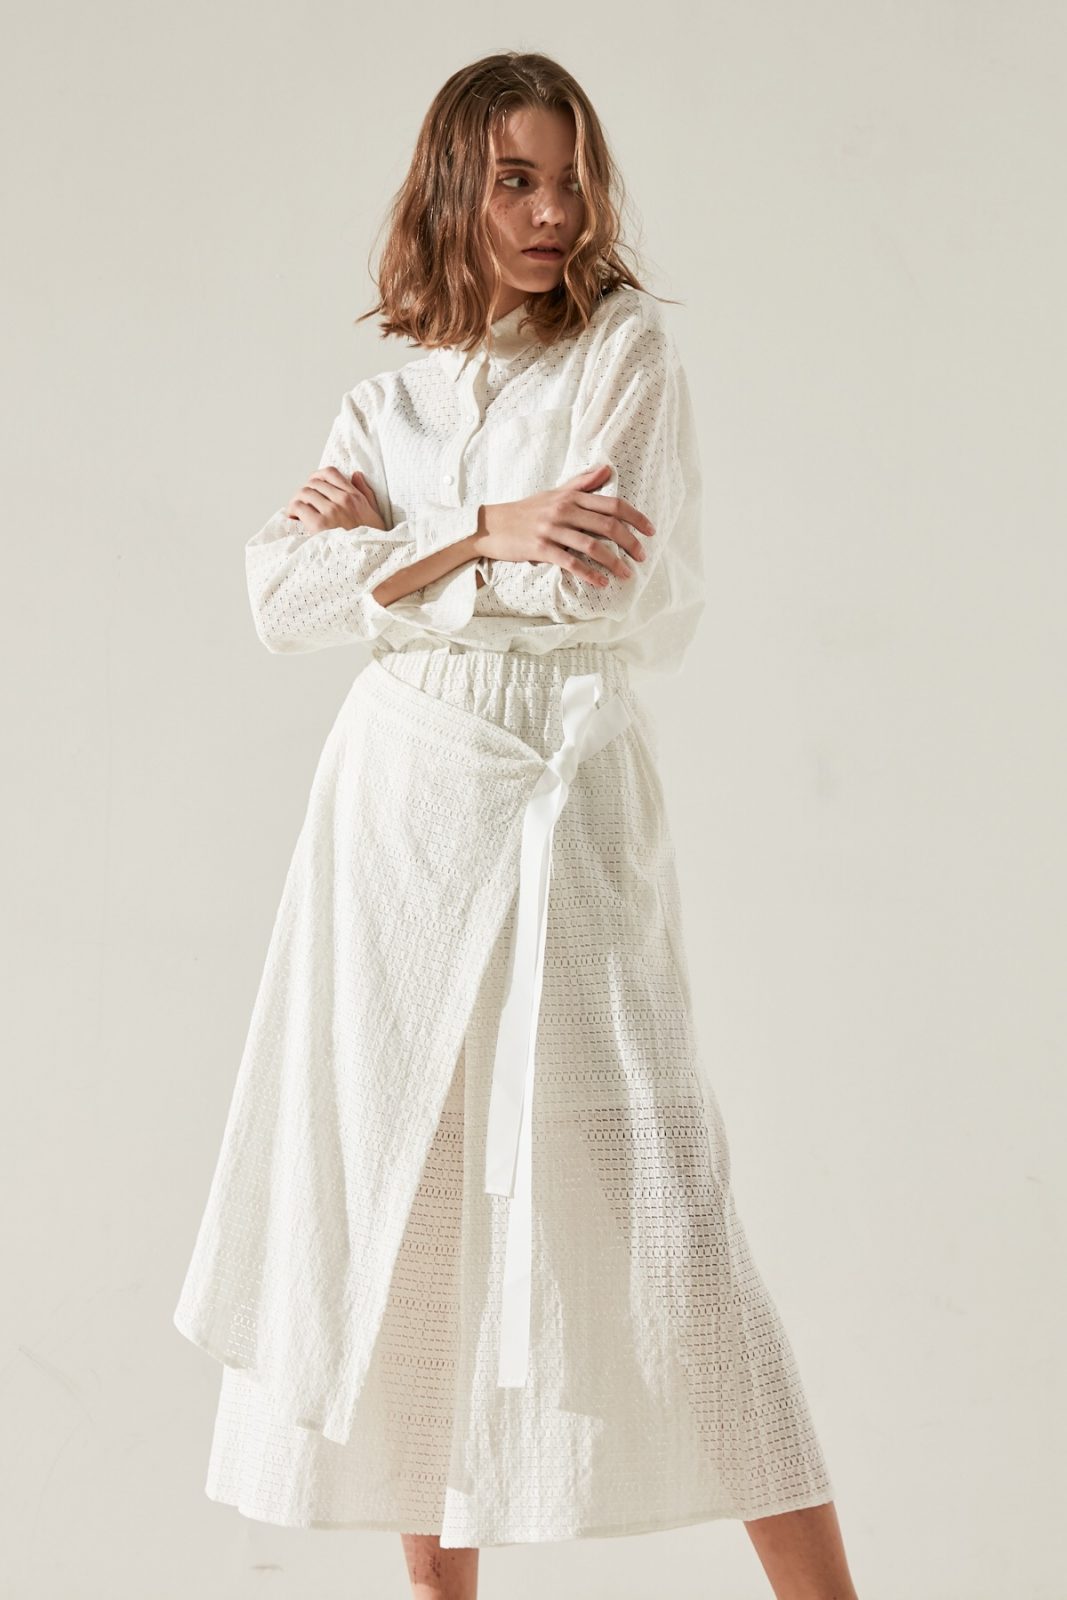 SKYE minimalist women fashion Aria cuolettes lace white 3